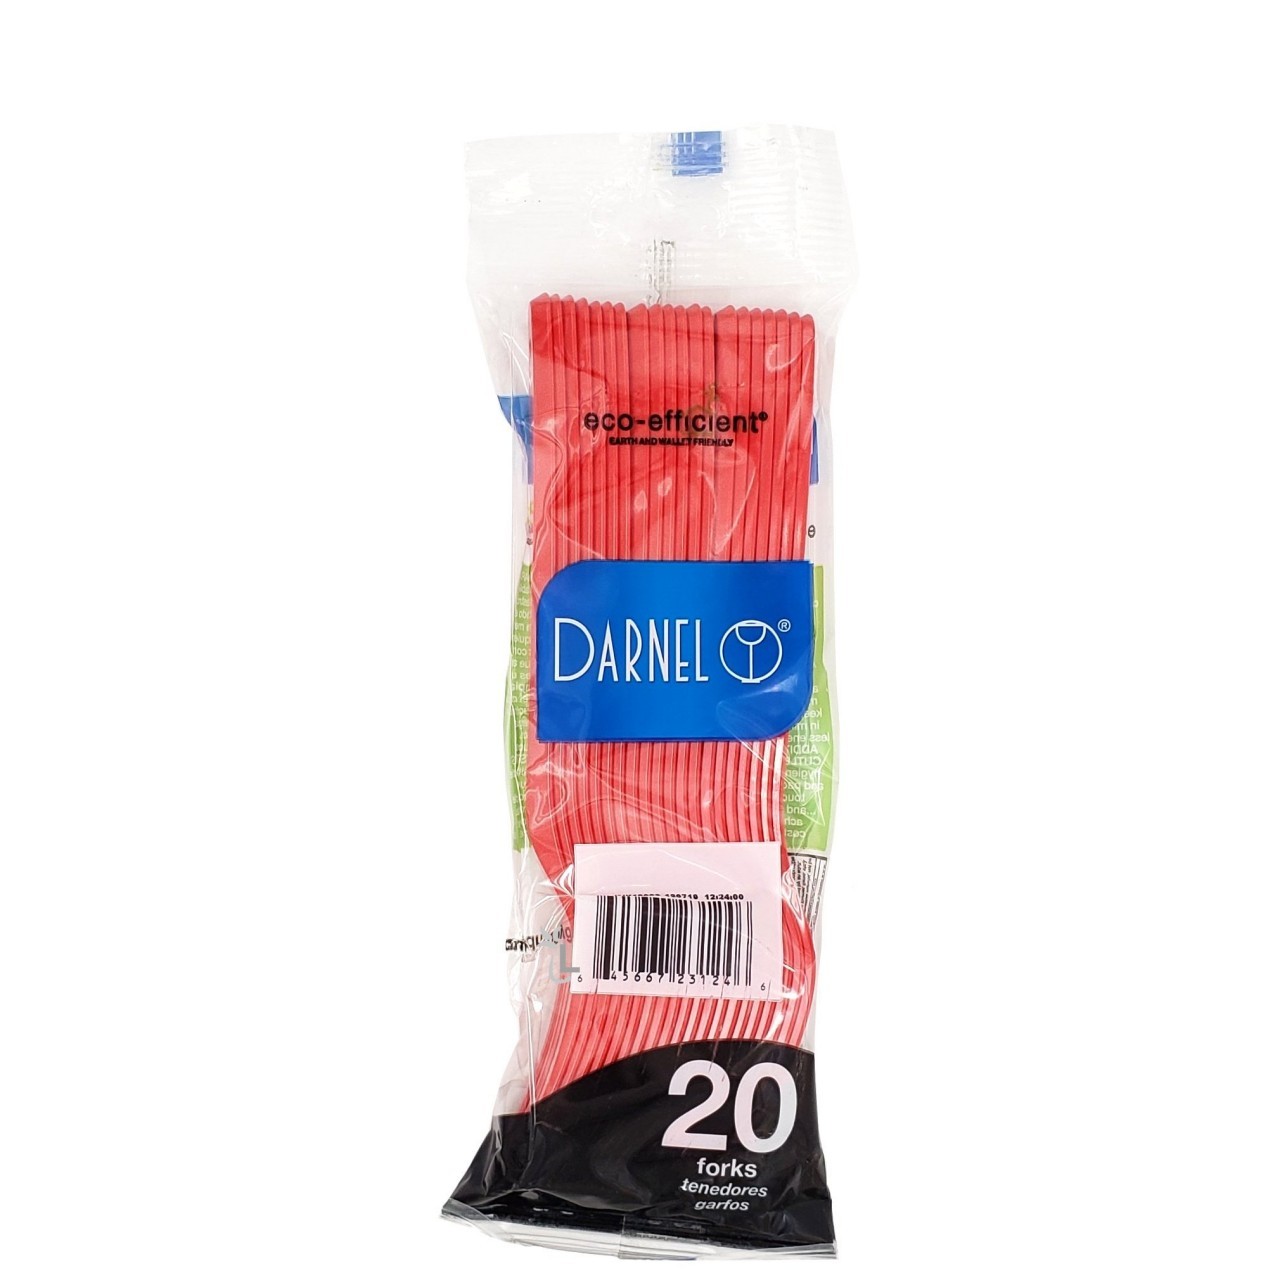 DARNEL PLASTIC FORKS RED 20s